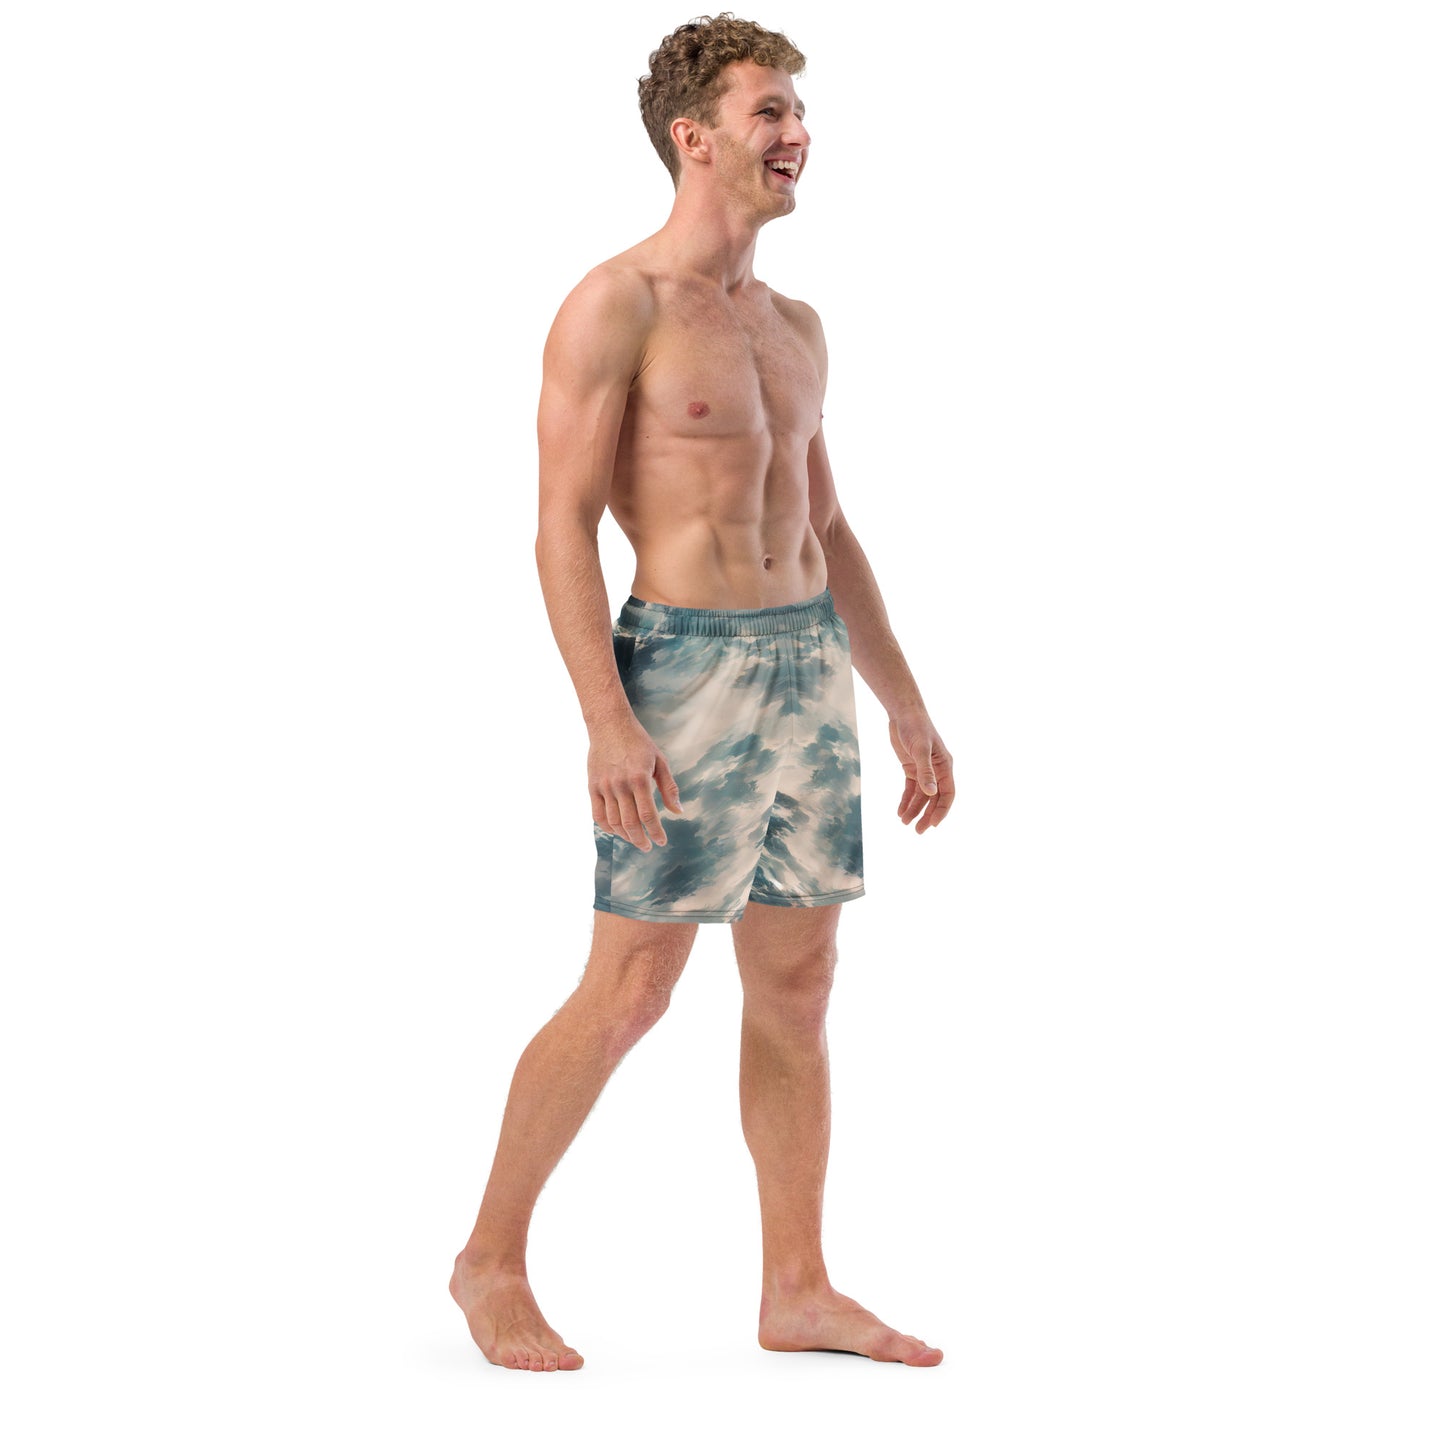 Smoky Mountains : Men's swim trunks